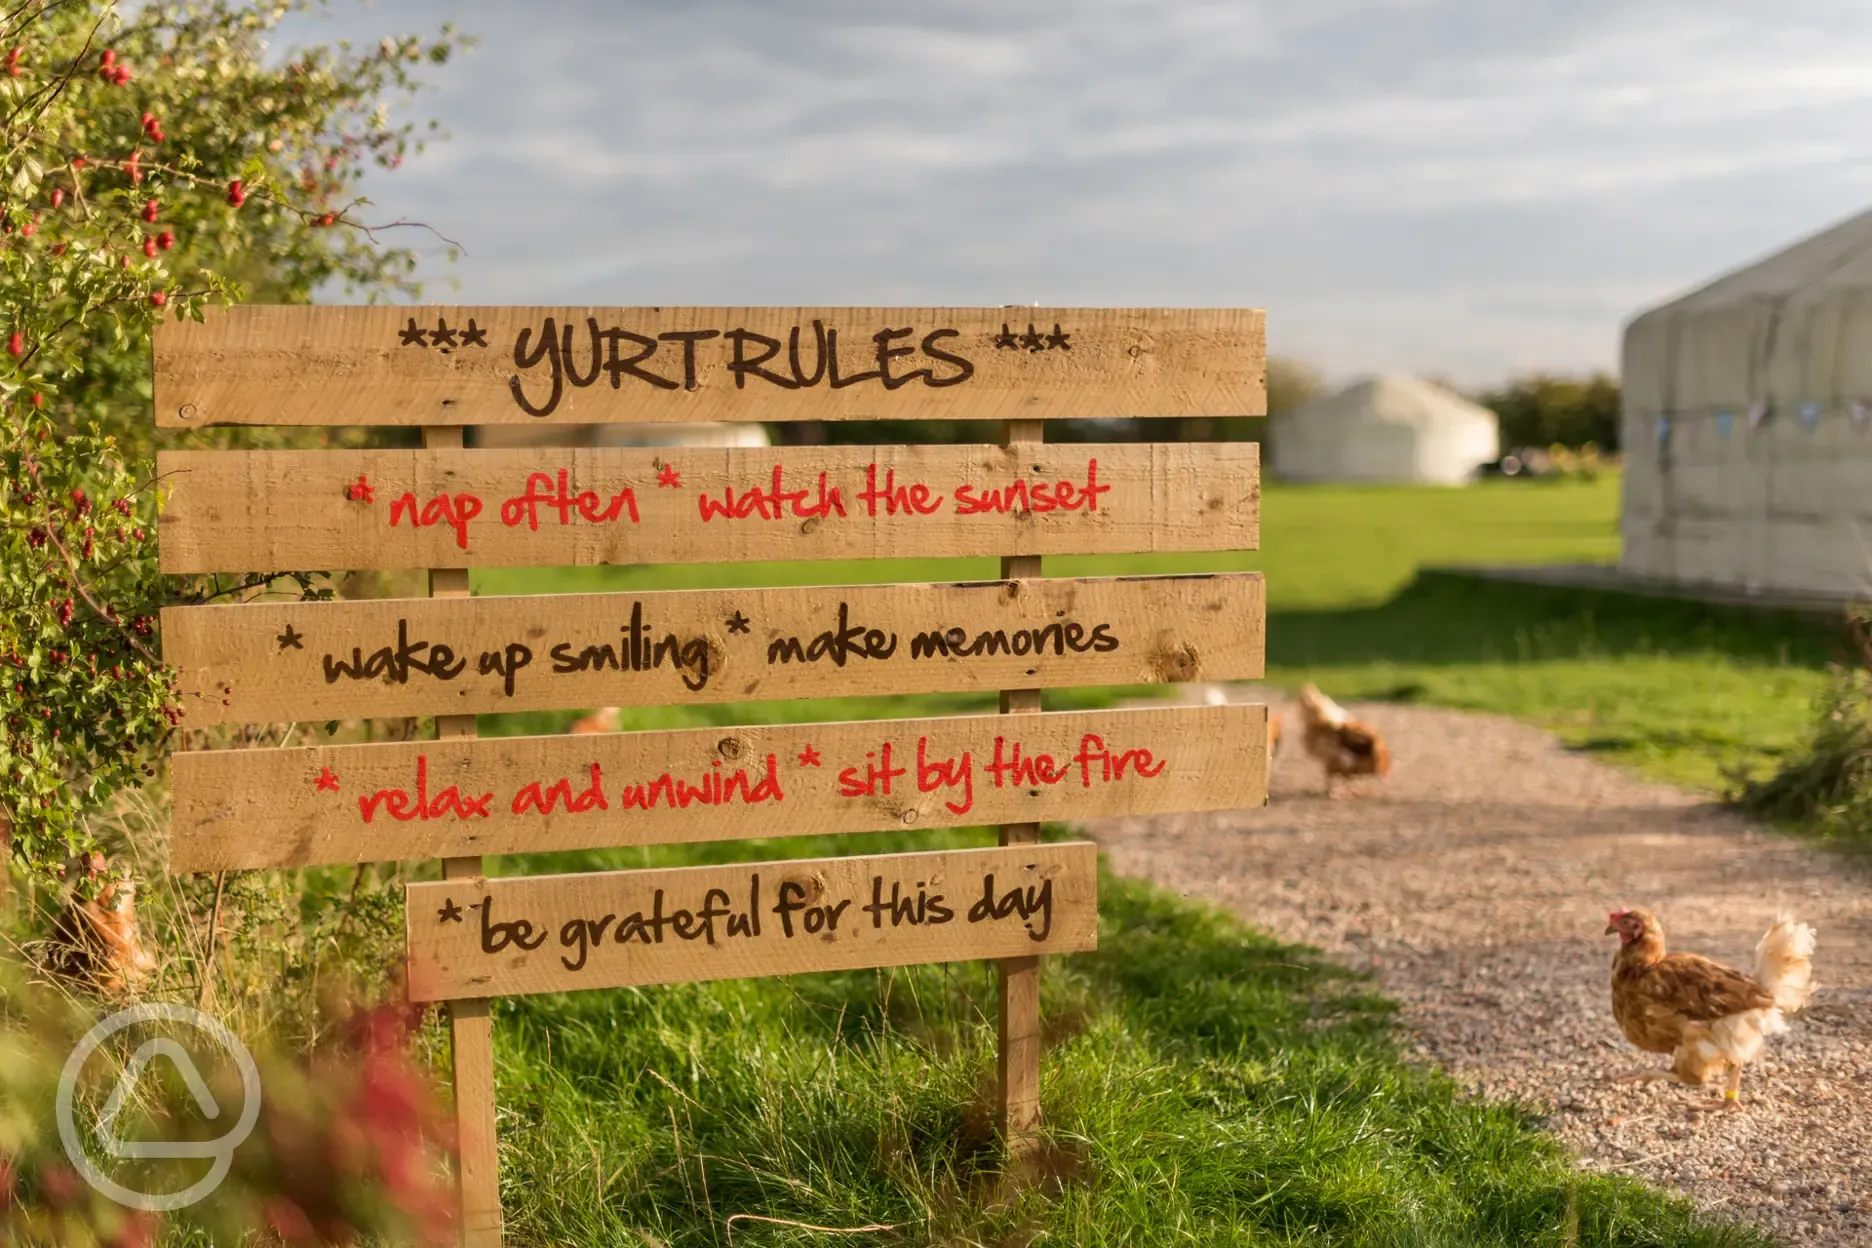 Yurt rules